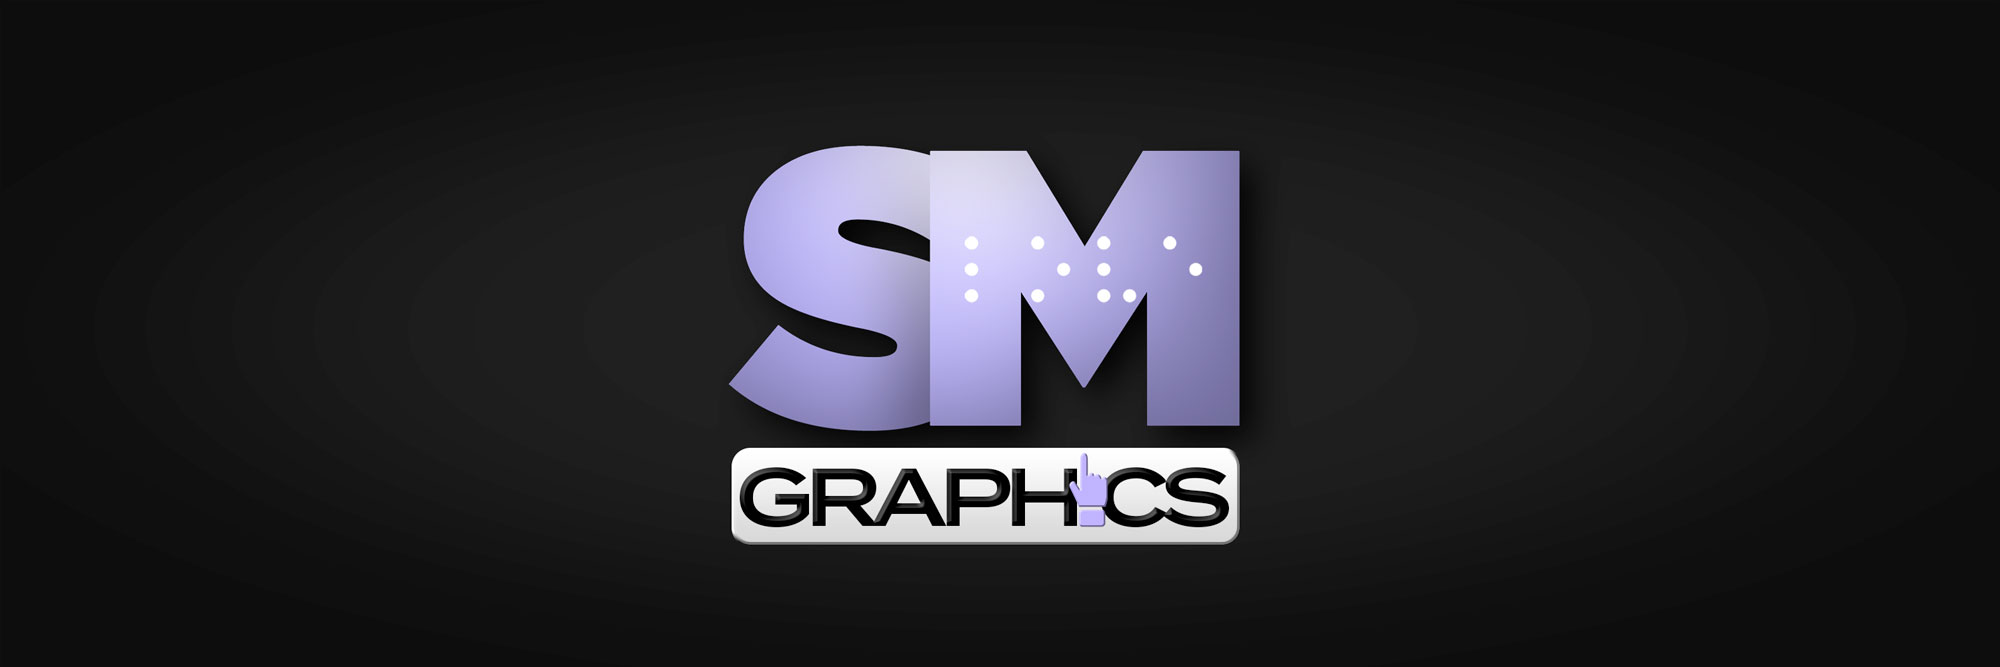 Banner SM Graphics